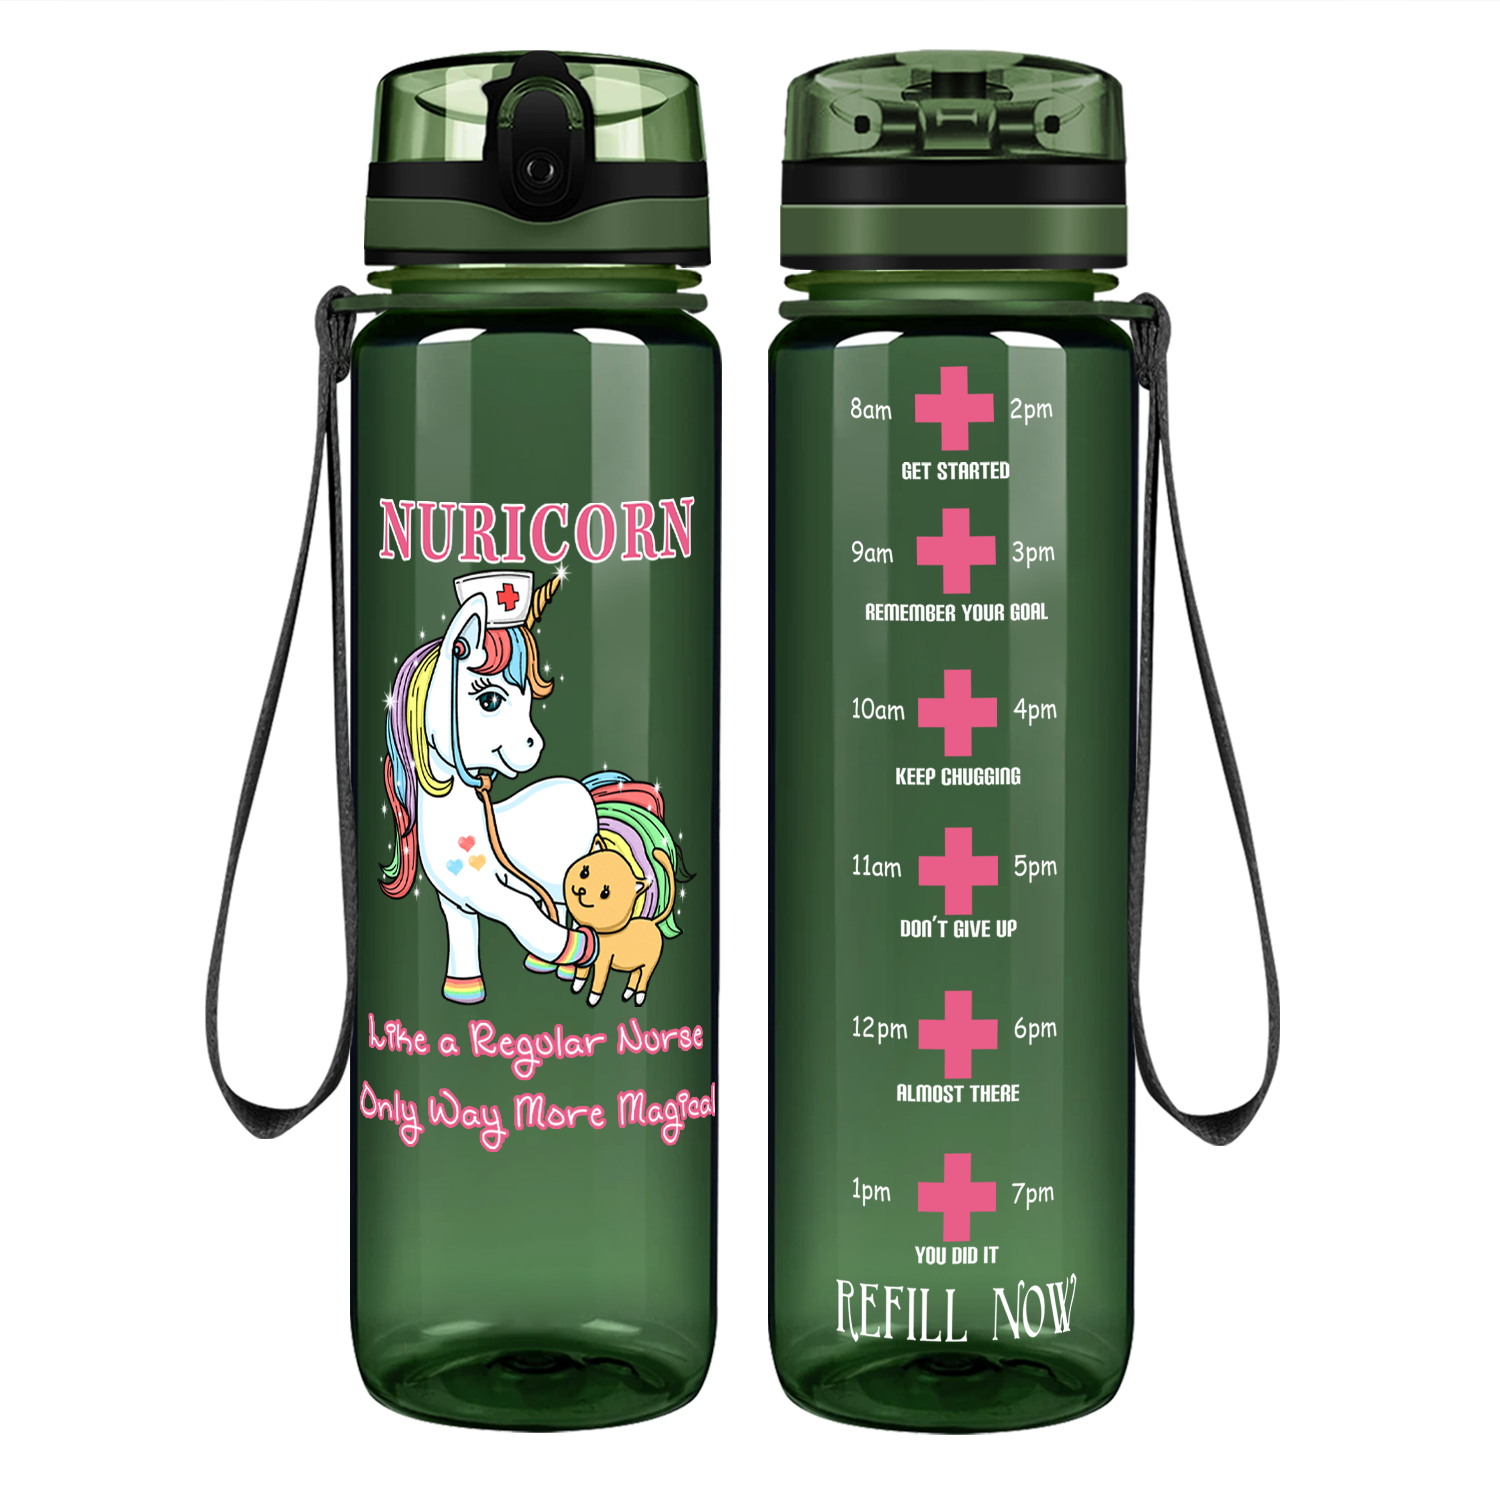 Nuricorn Way More Magical on 32oz Motivational Nurse Water Bottle